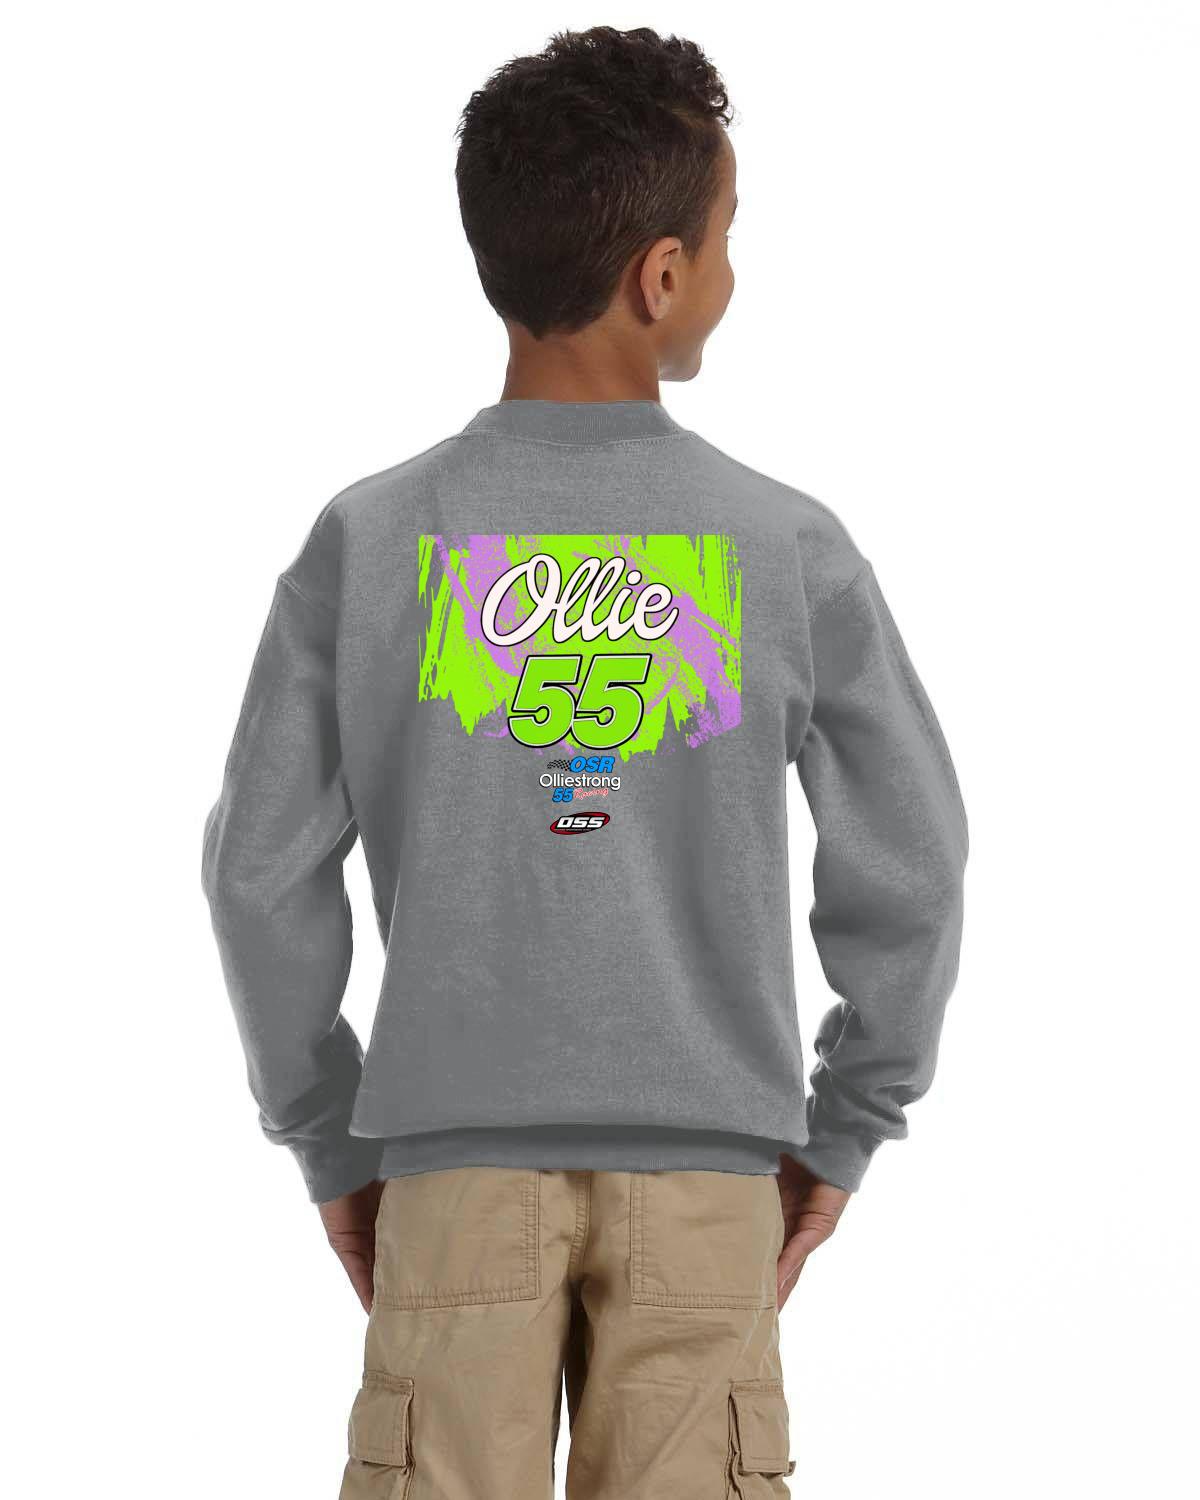 Ollie Ferguson OSS / OSR Racing Youth Crew neck sweater